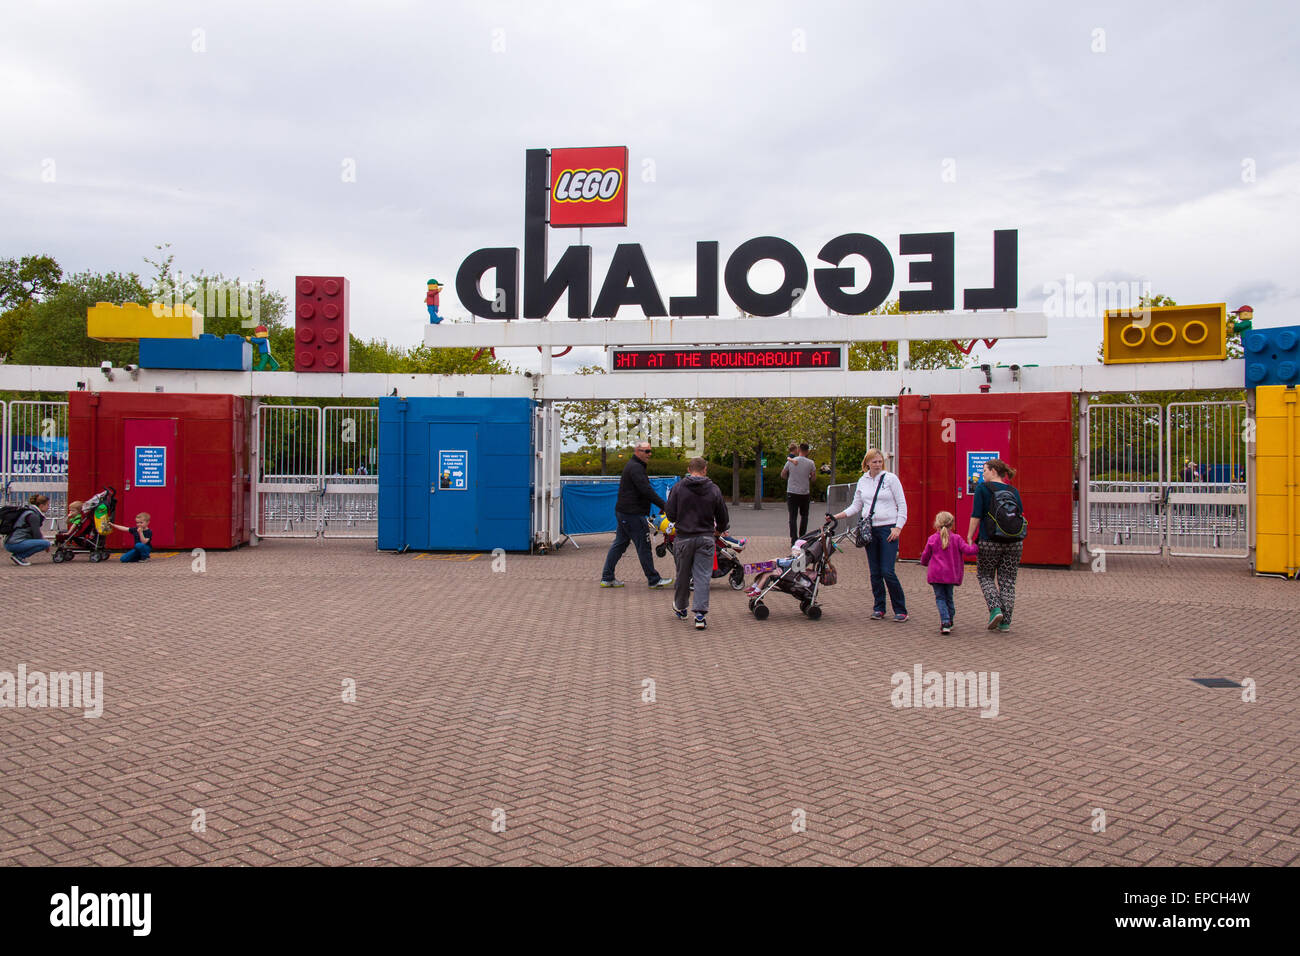 Puerta de entrada a Legoland Windsor, Londres, Inglaterra, Reino Unido. Foto de stock